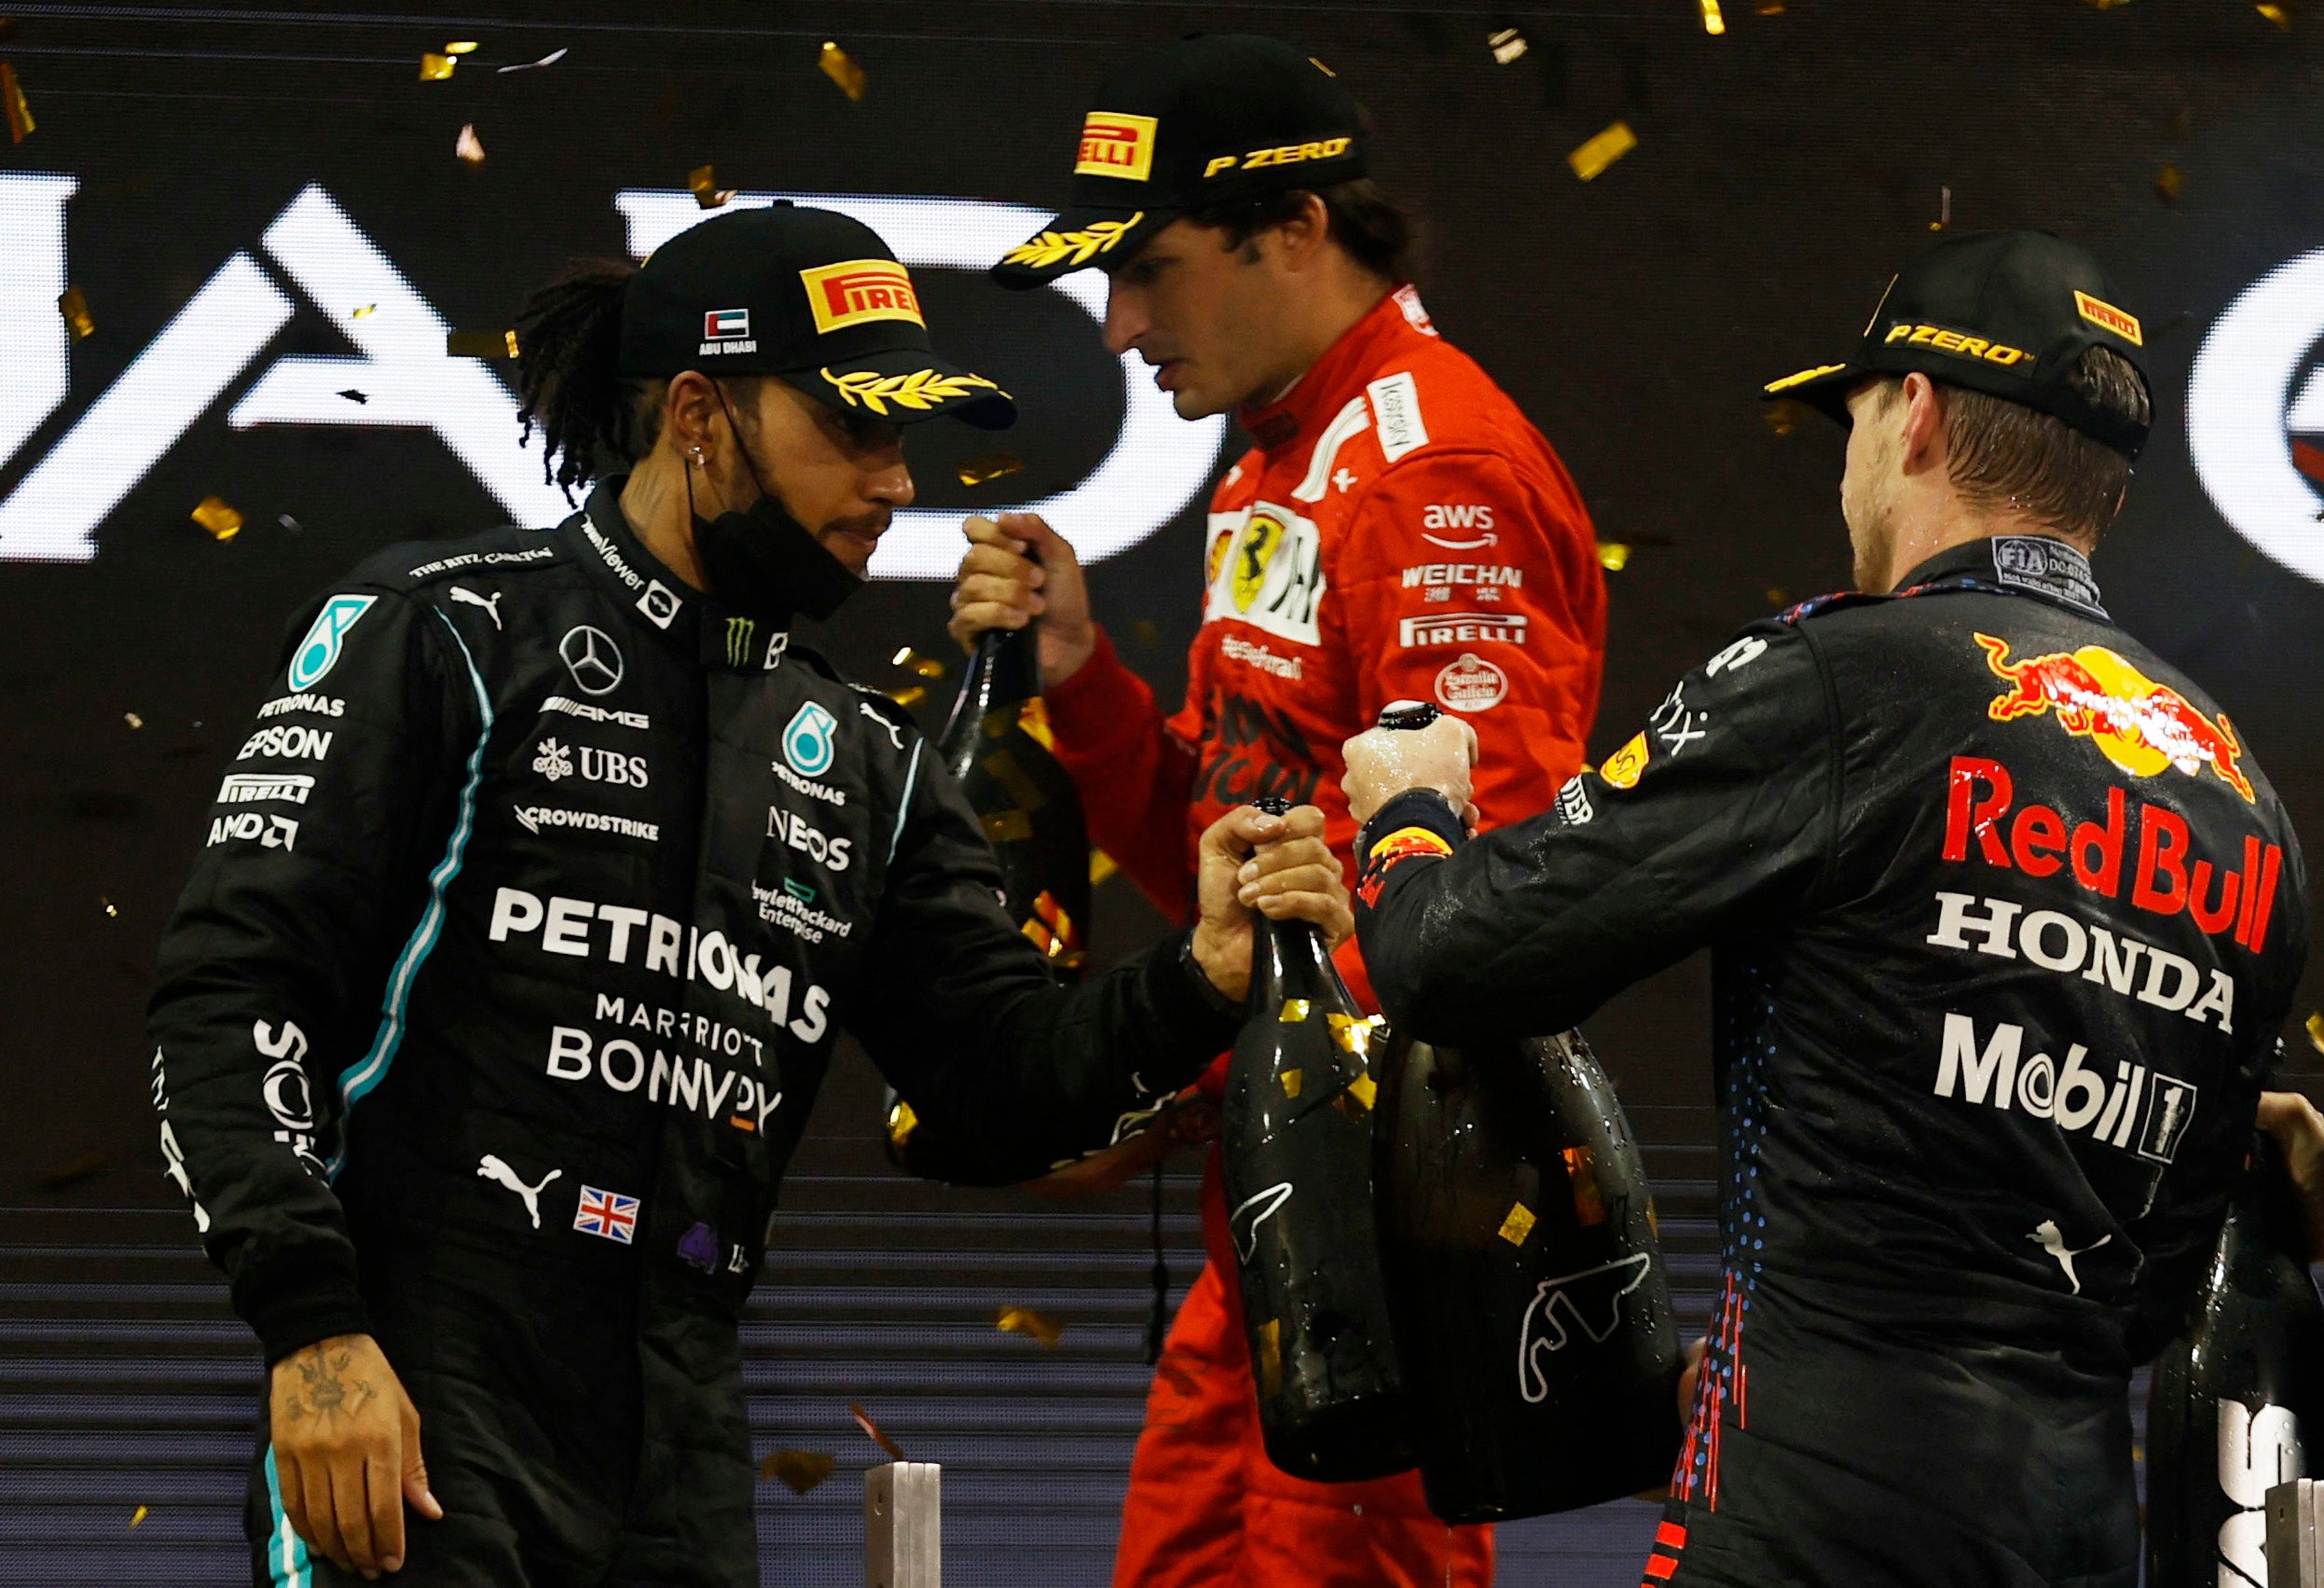 Carlos Sainz, background, was on the podium in Abu Dhabi